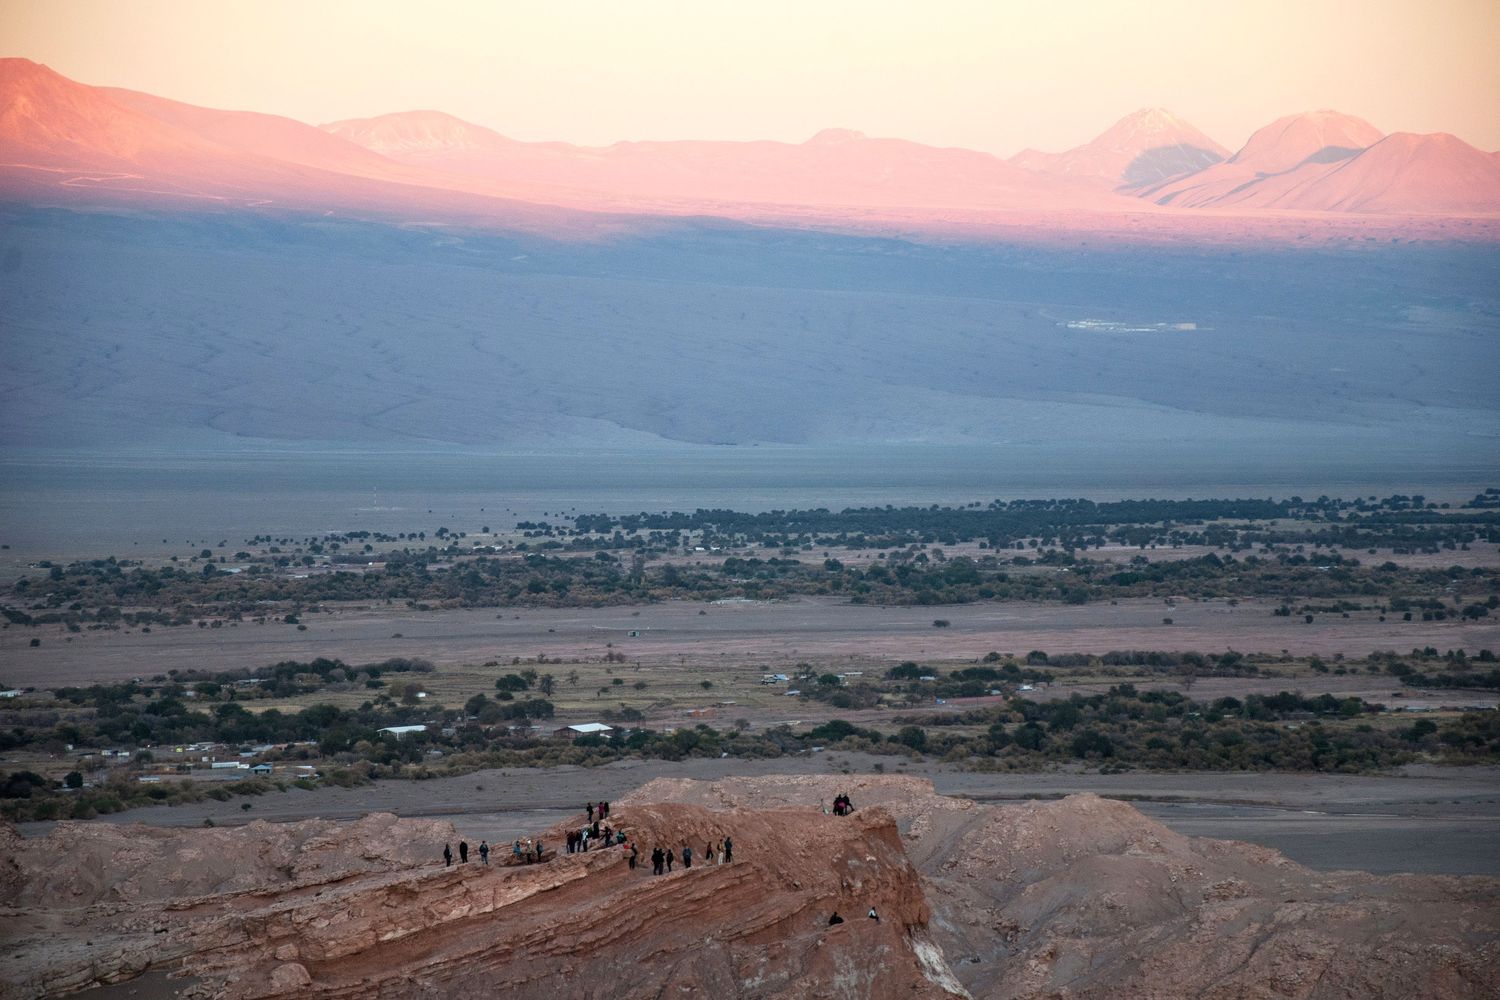 Sunset in San Pedro de Atacama. Winter 2019.